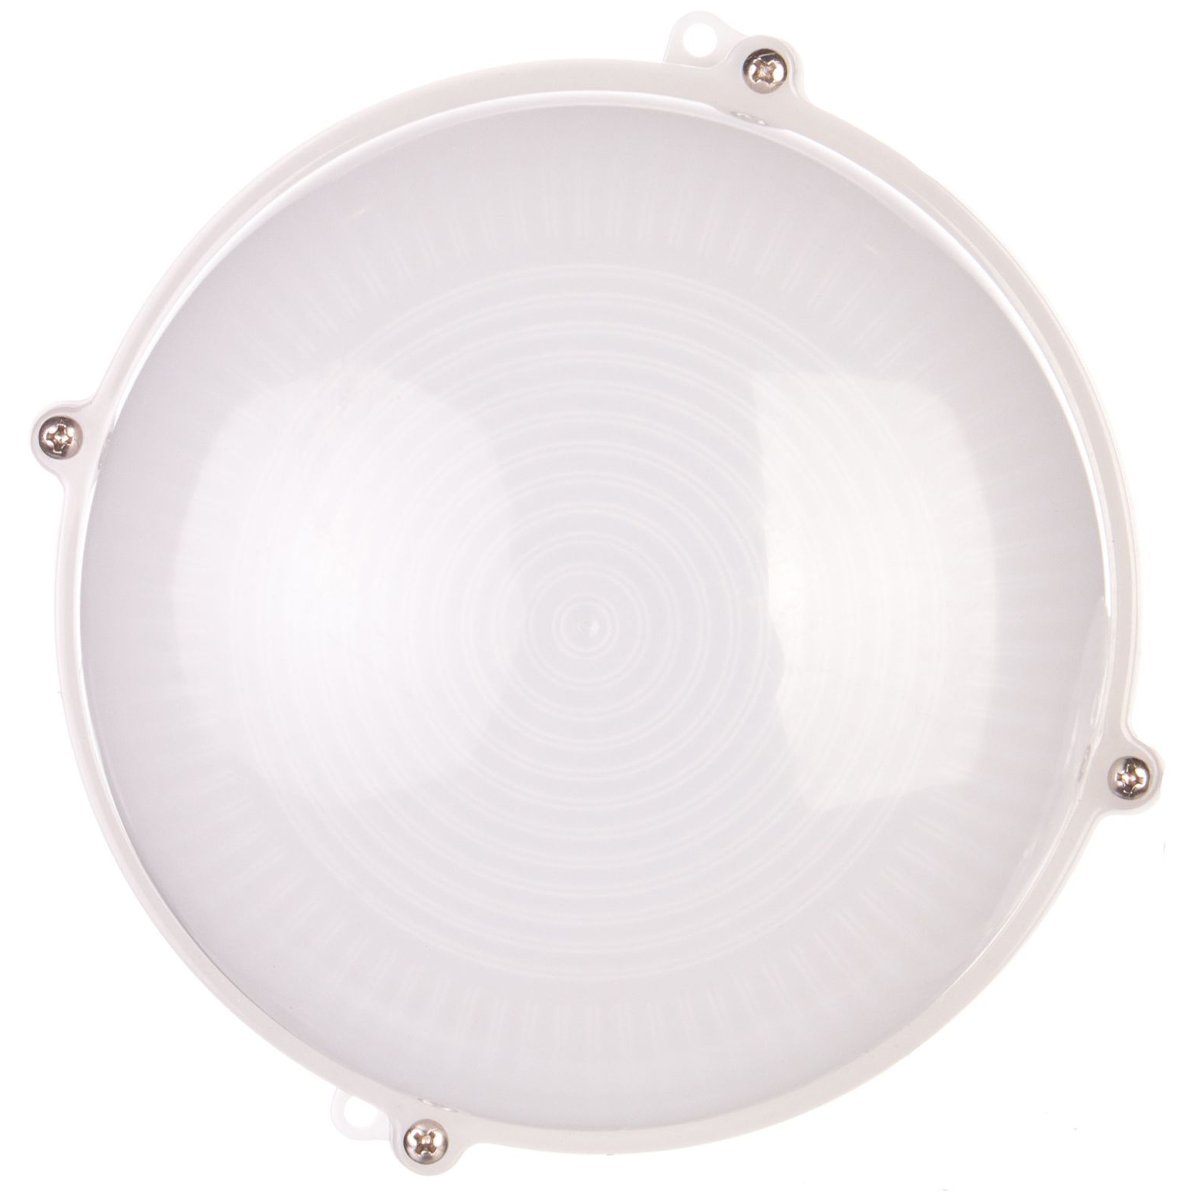 CGC DOTTIE White Round LED Outdoor Wall Light